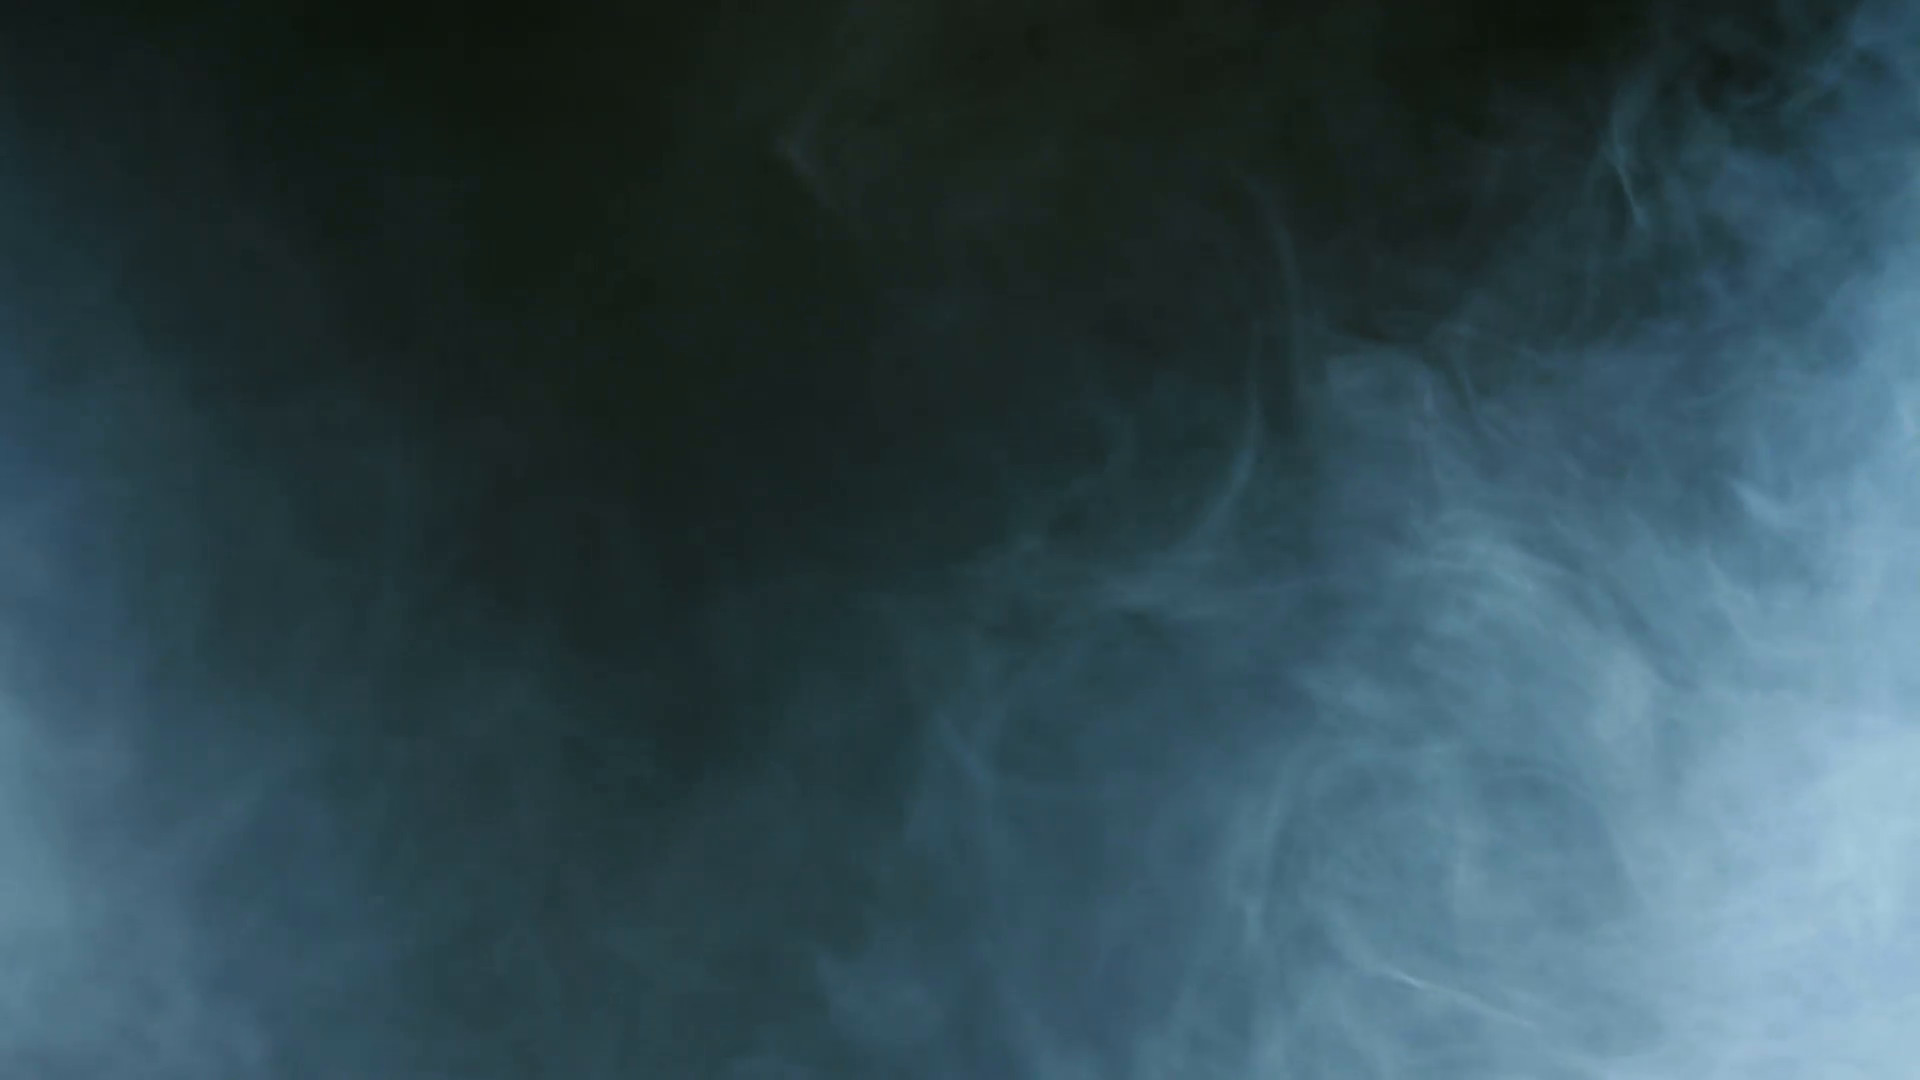 1920x1080 Blue smoke on black background. Cigarette smoke. Smoke effect. Fog  background. Abstract smoke cloud in slow motion. Smoke in studio blue light.